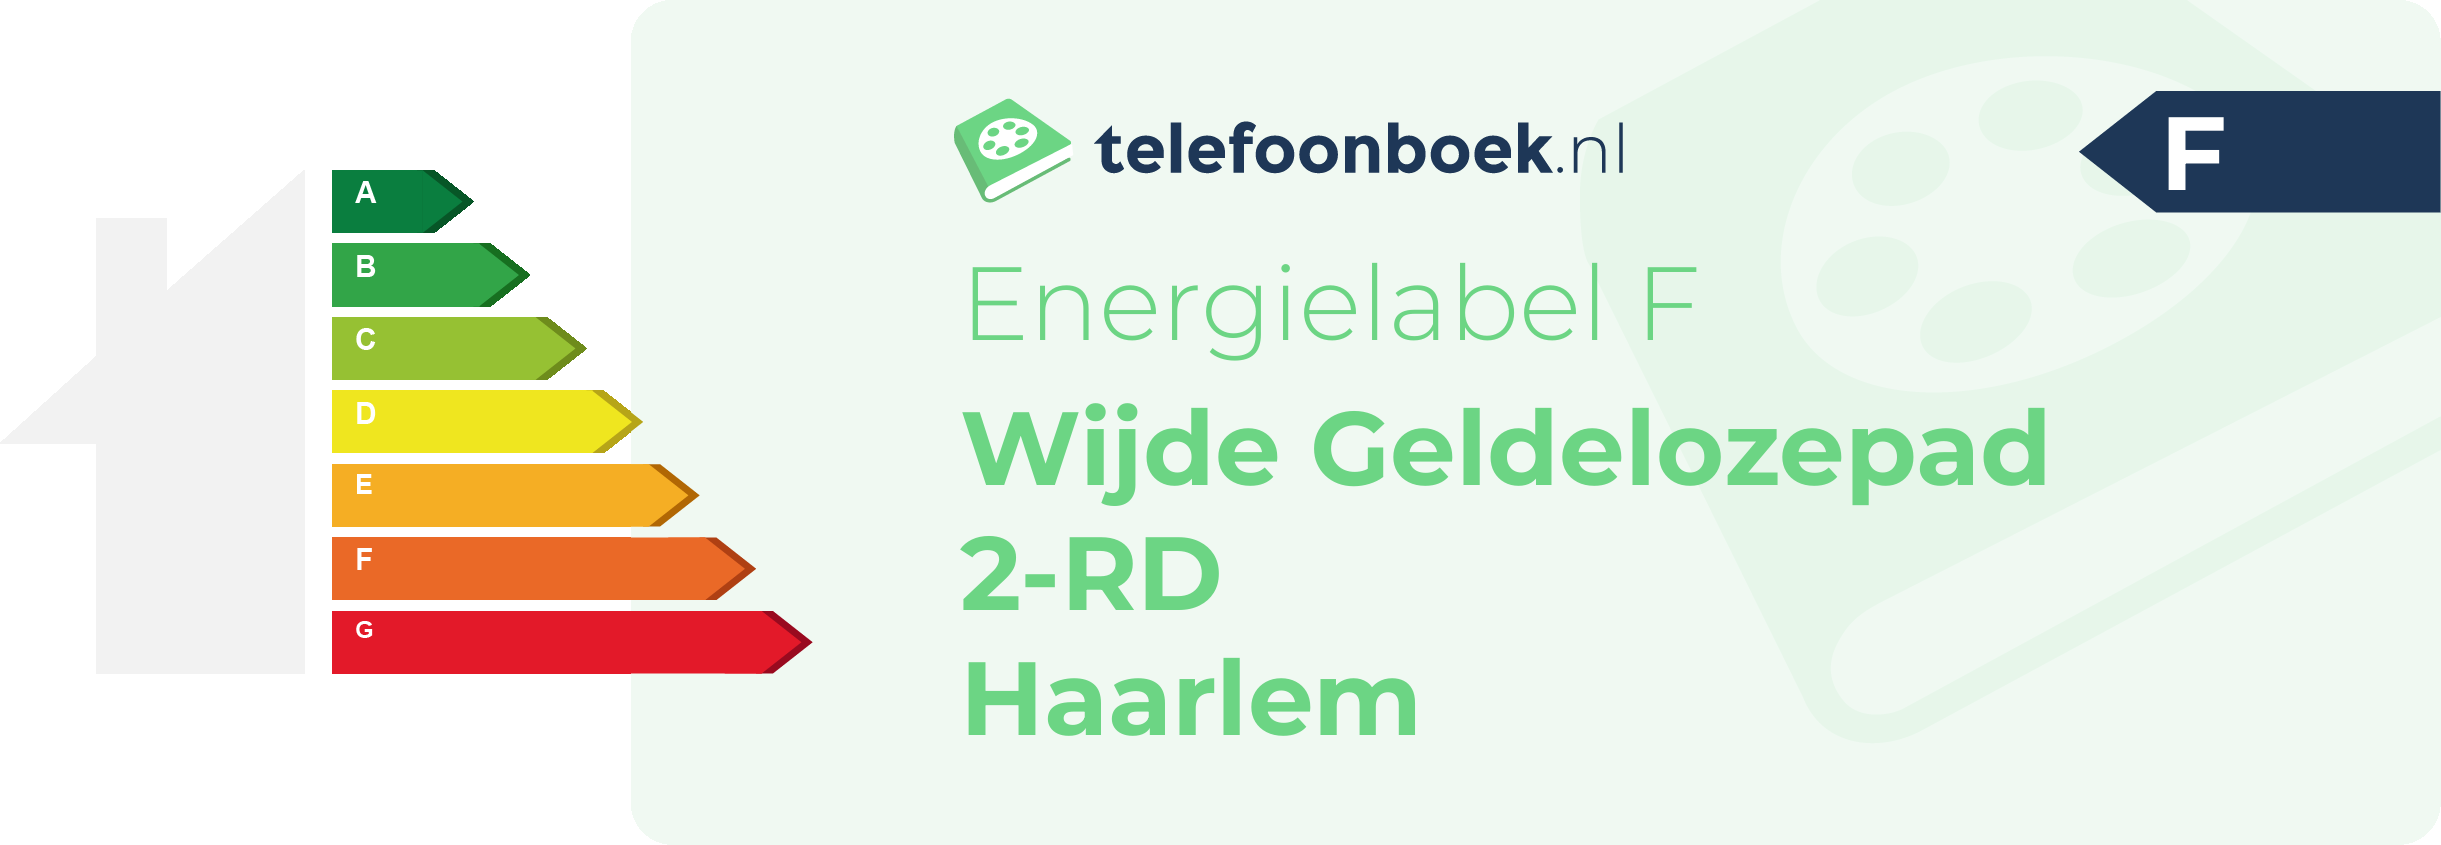 Energielabel Wijde Geldelozepad 2-RD Haarlem